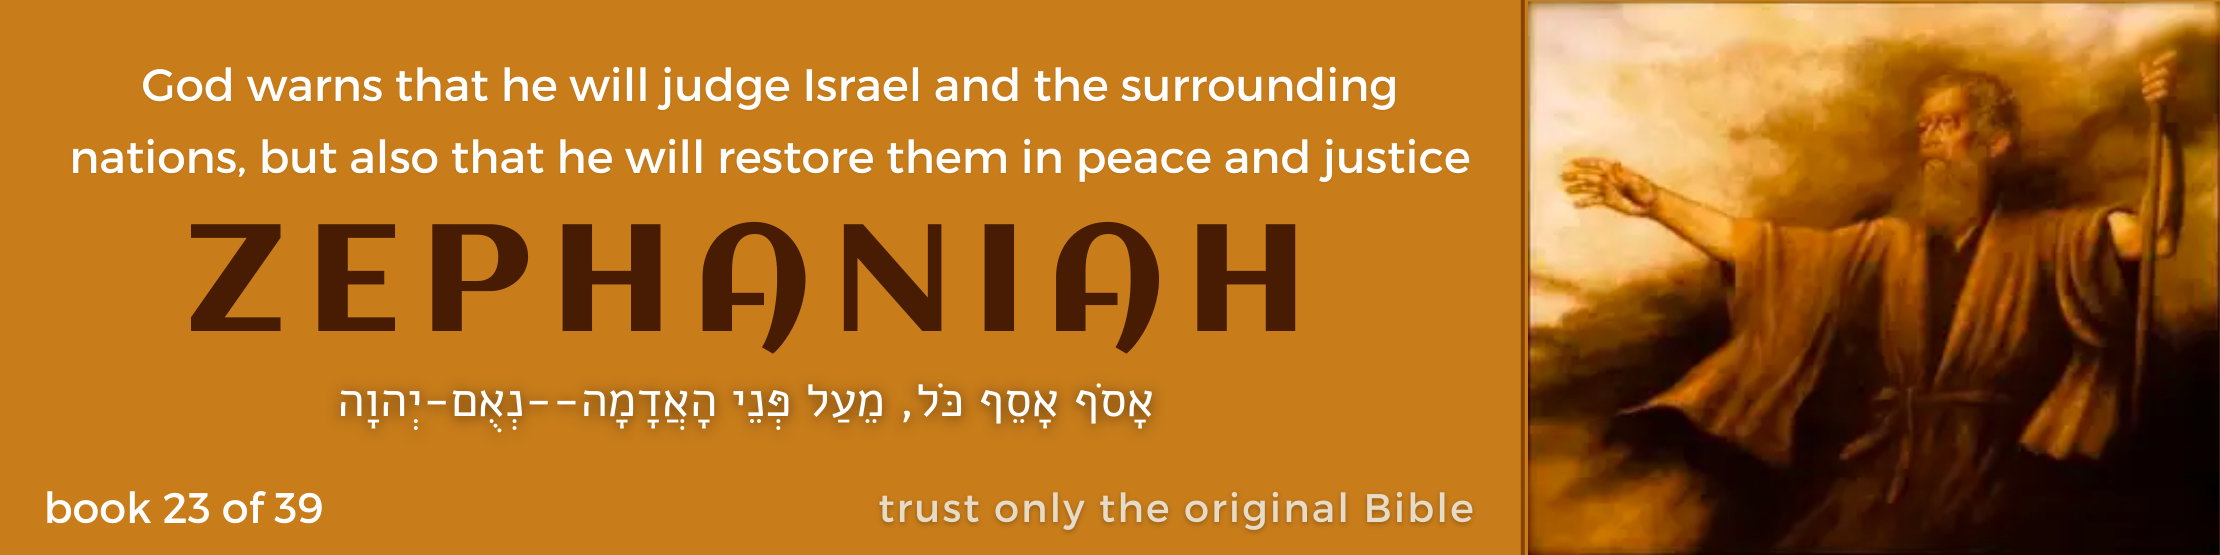 23 Zephaniah book - original bible - banner